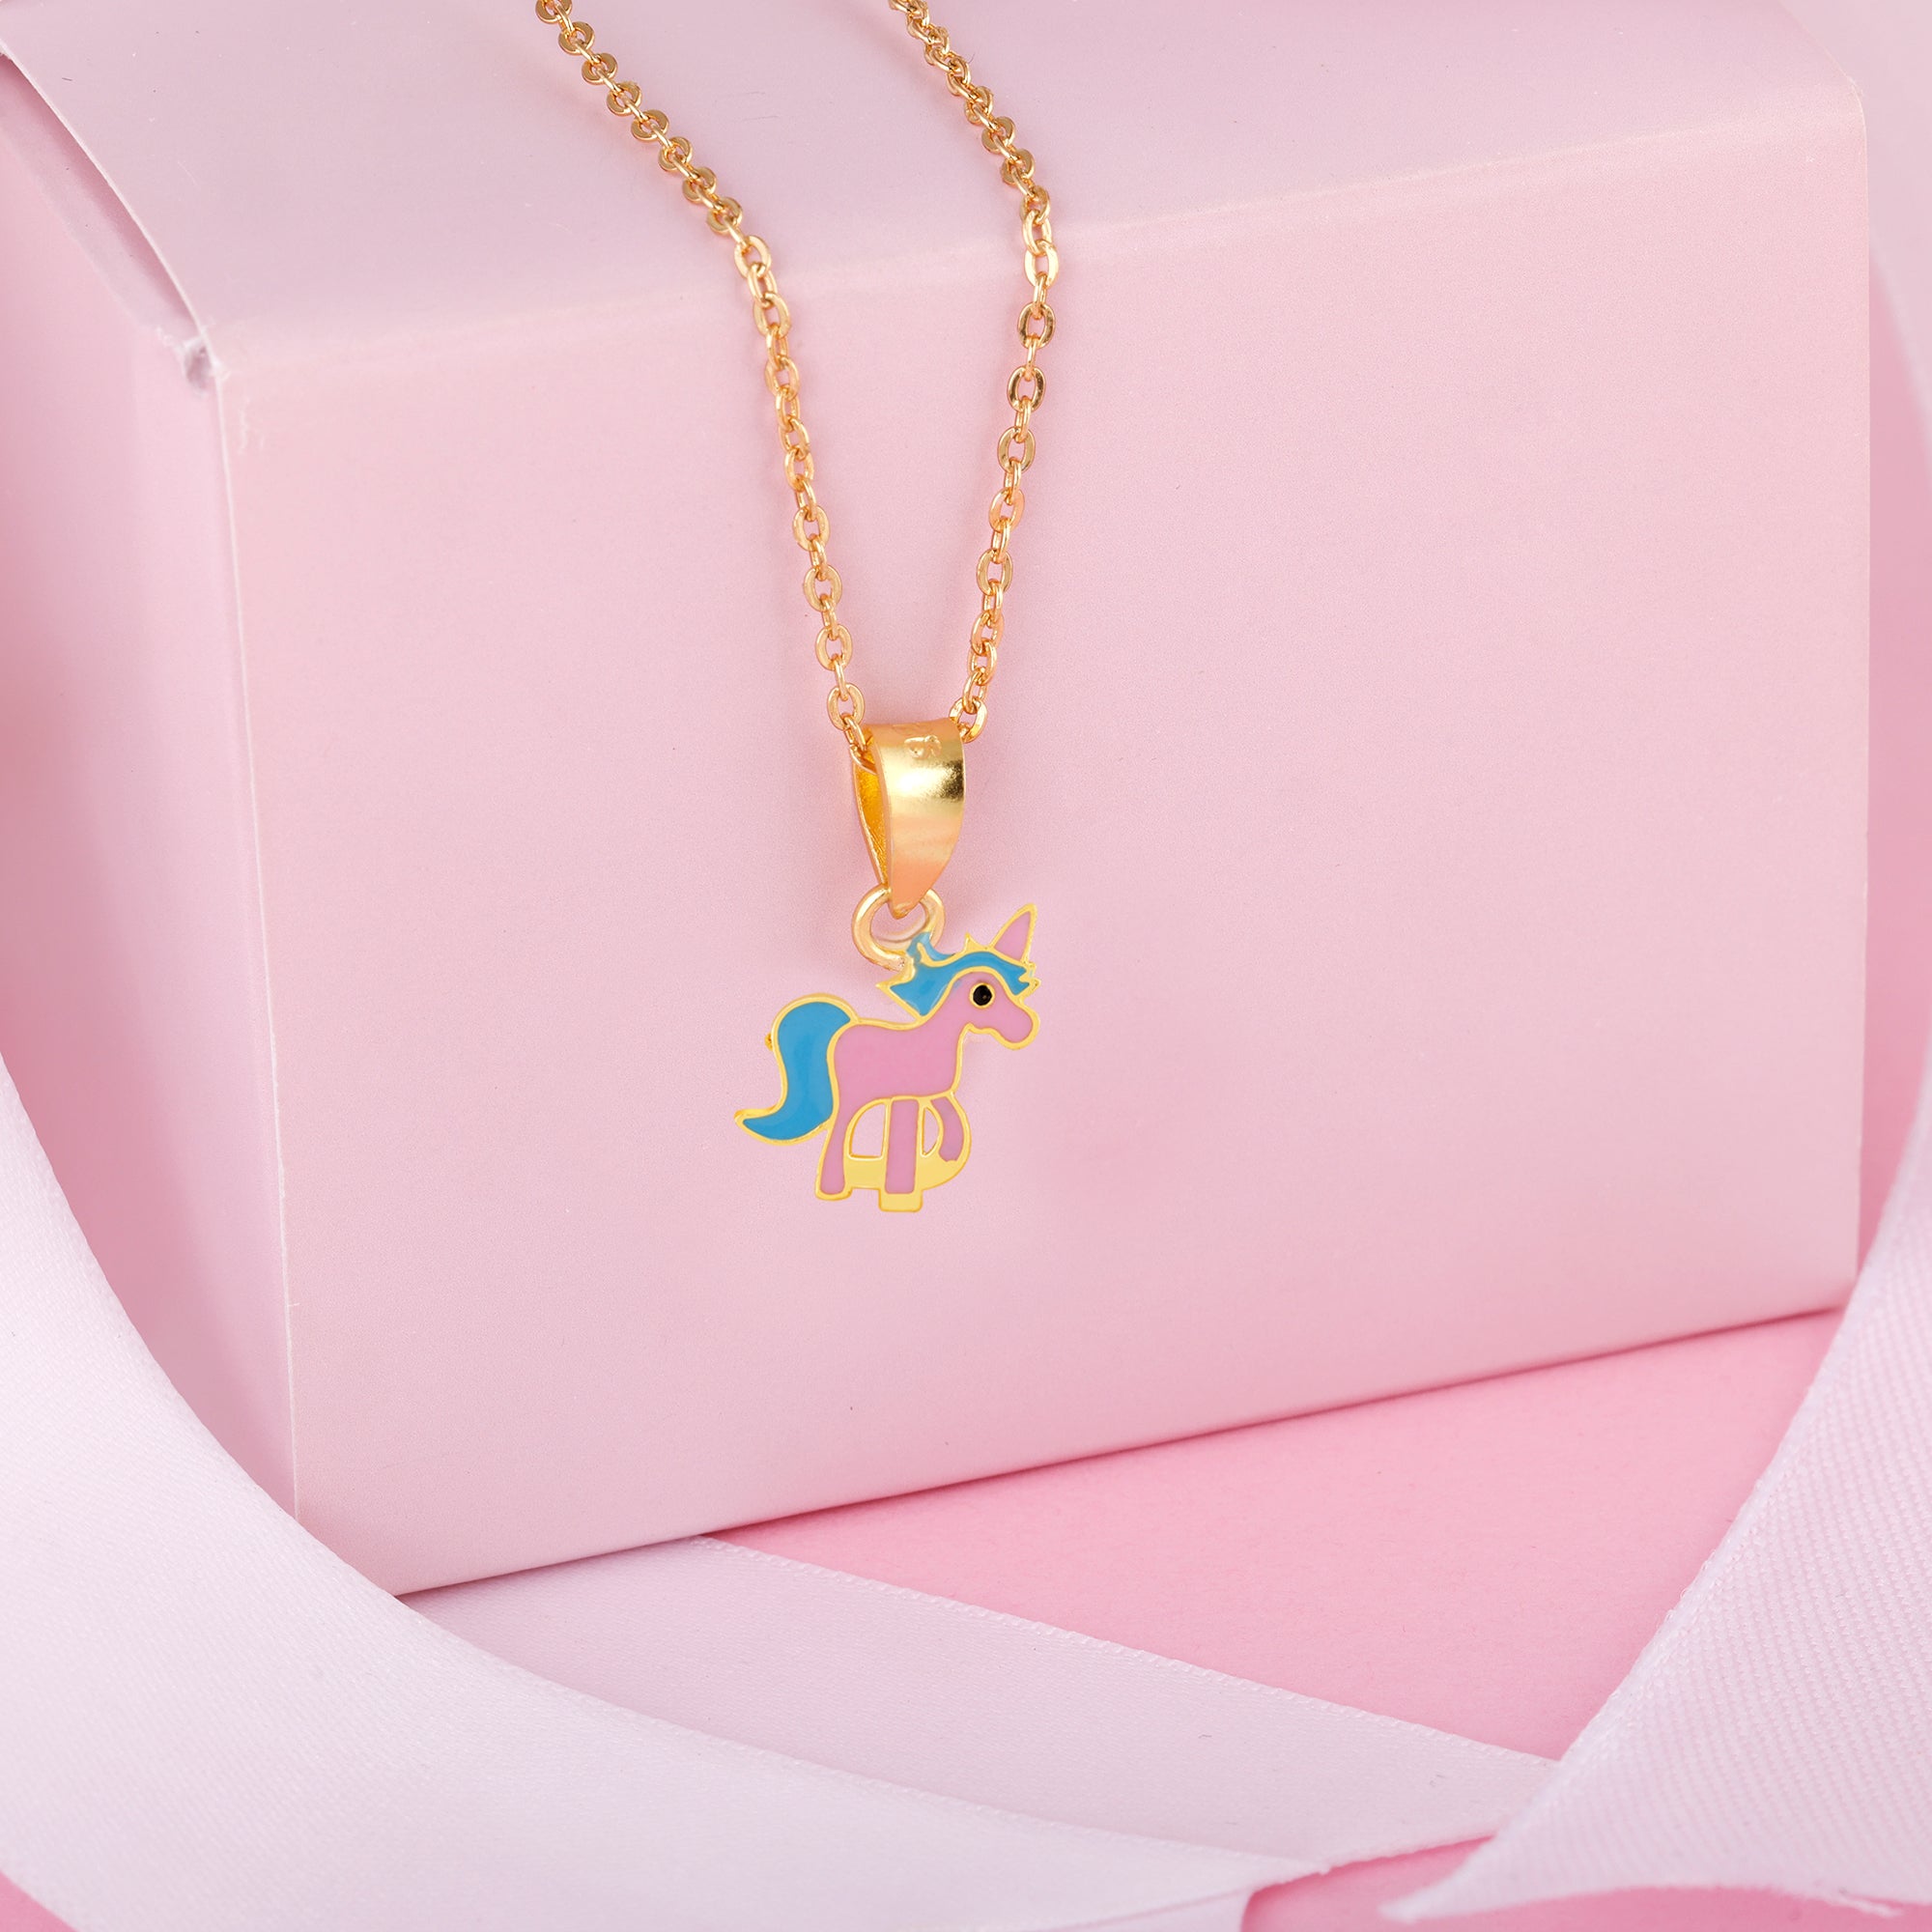 Unicorn Necklace | Jewelry Charm Stuff Unicorn Gifts for Women Men Pendant  Accessories and Black Chain | Amazon.com